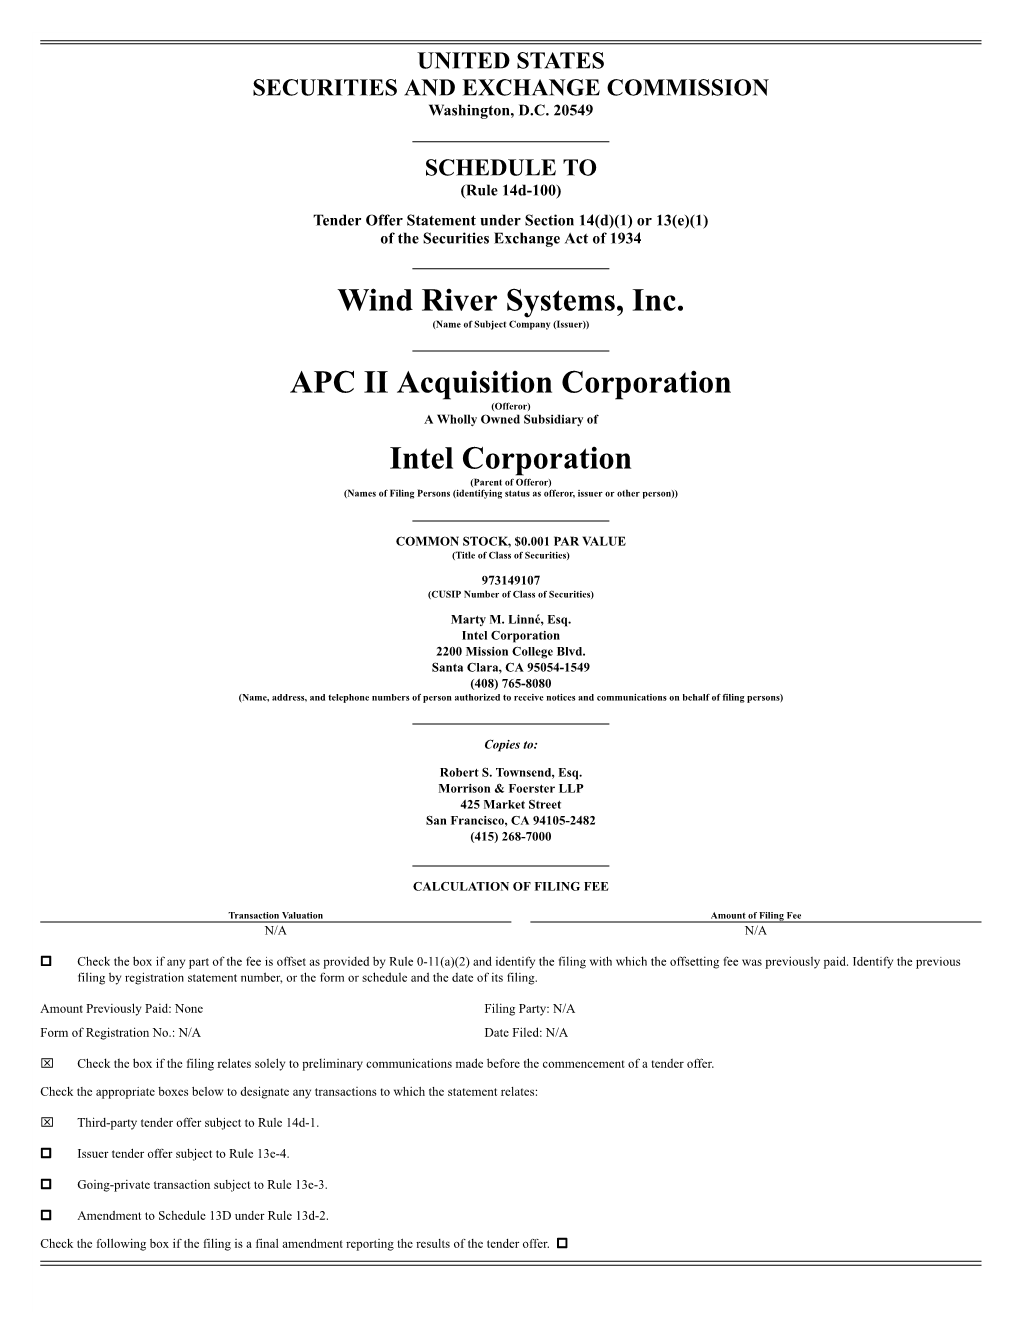 Wind River Systems, Inc. APC II Acquisition Corporation Intel